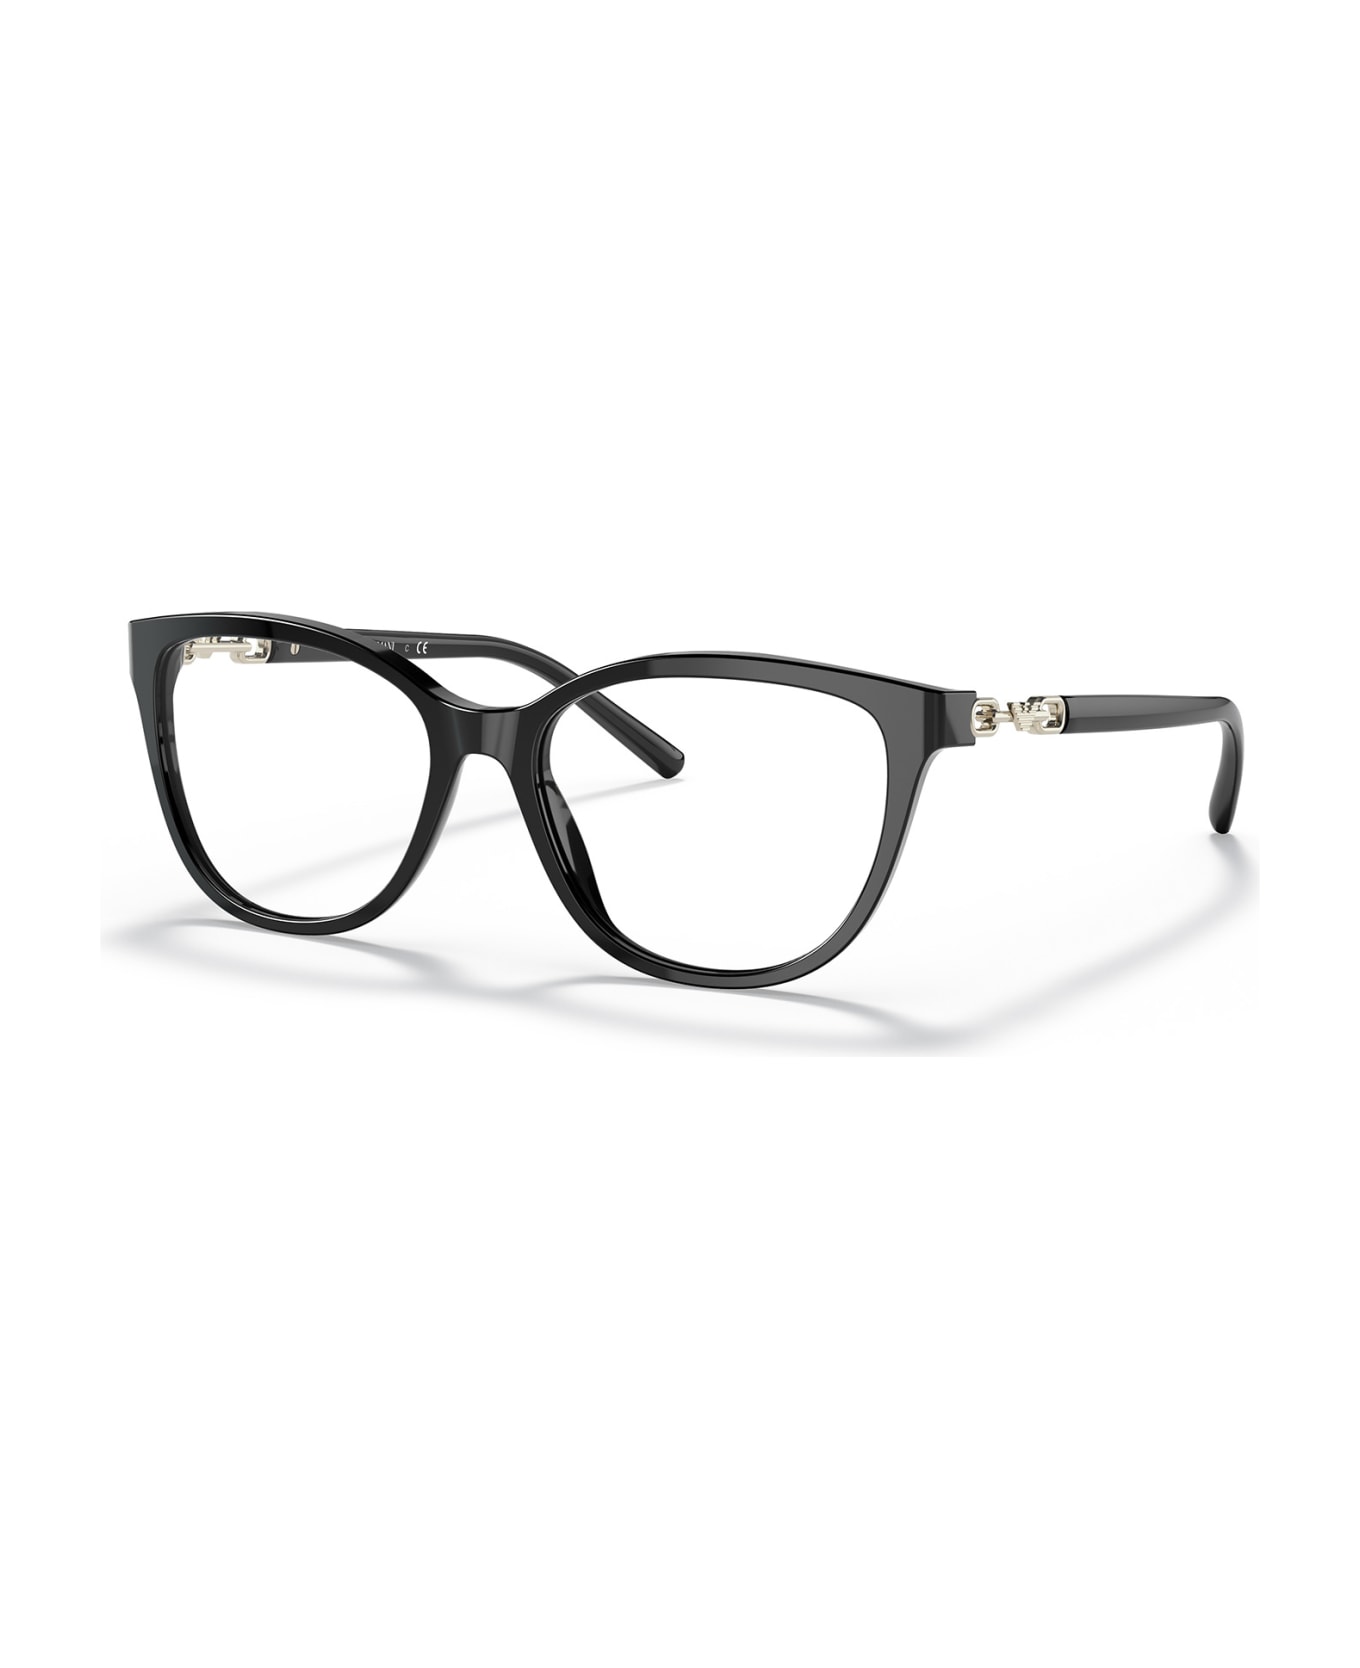 Emporio Armani Ea3190 Black Glasses - Black